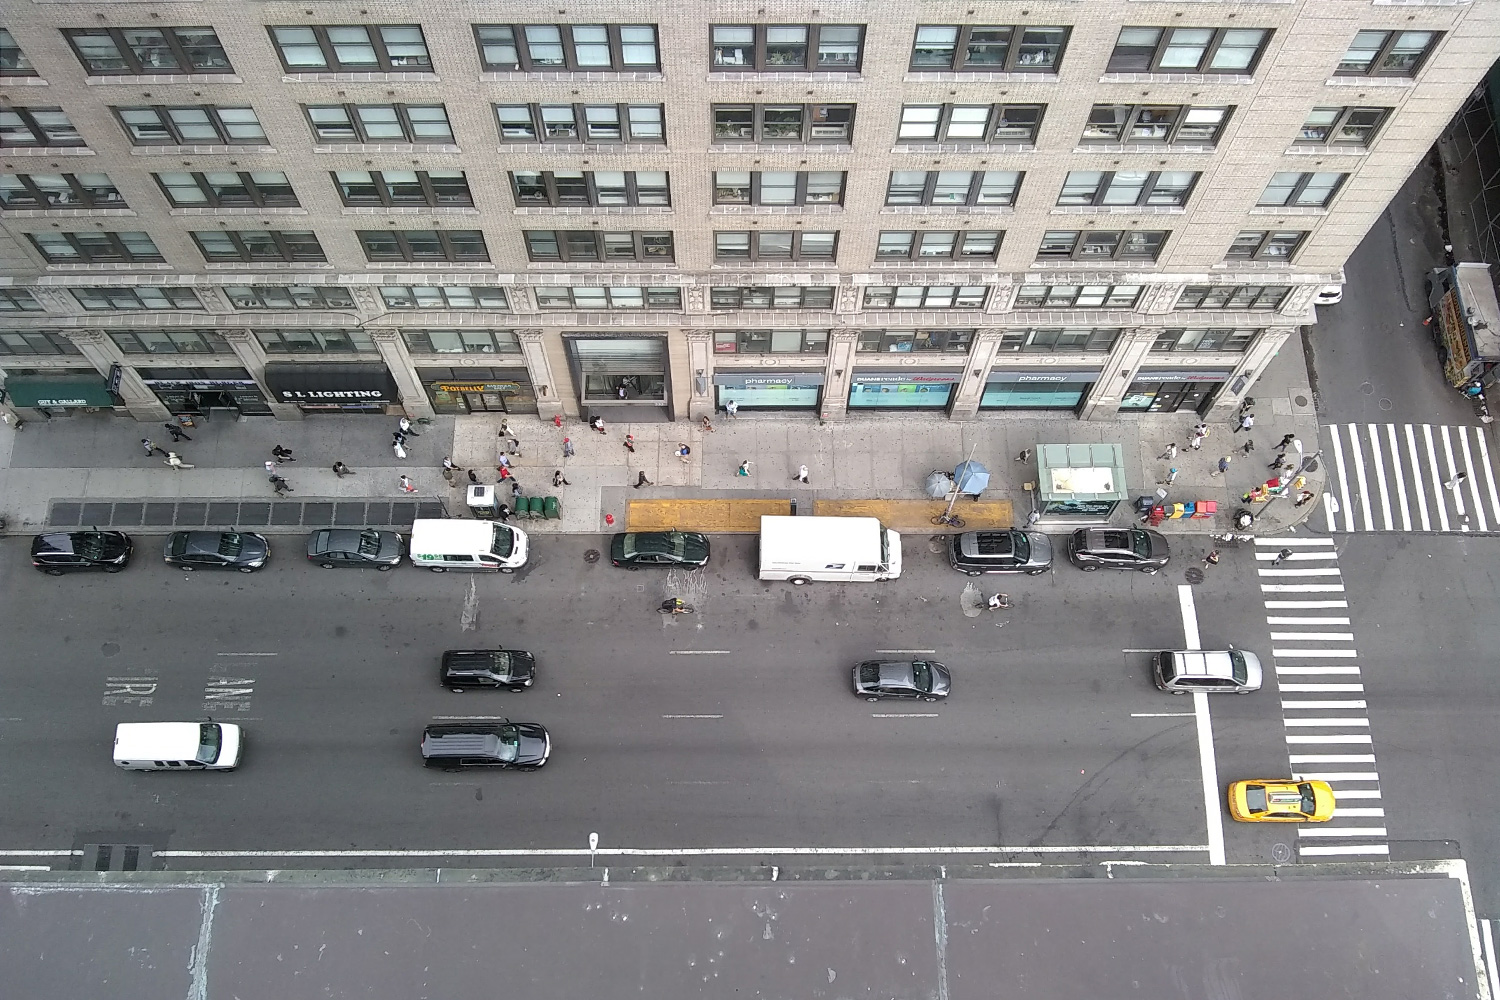 Moto E4 camera sample of a bird's eye view of street